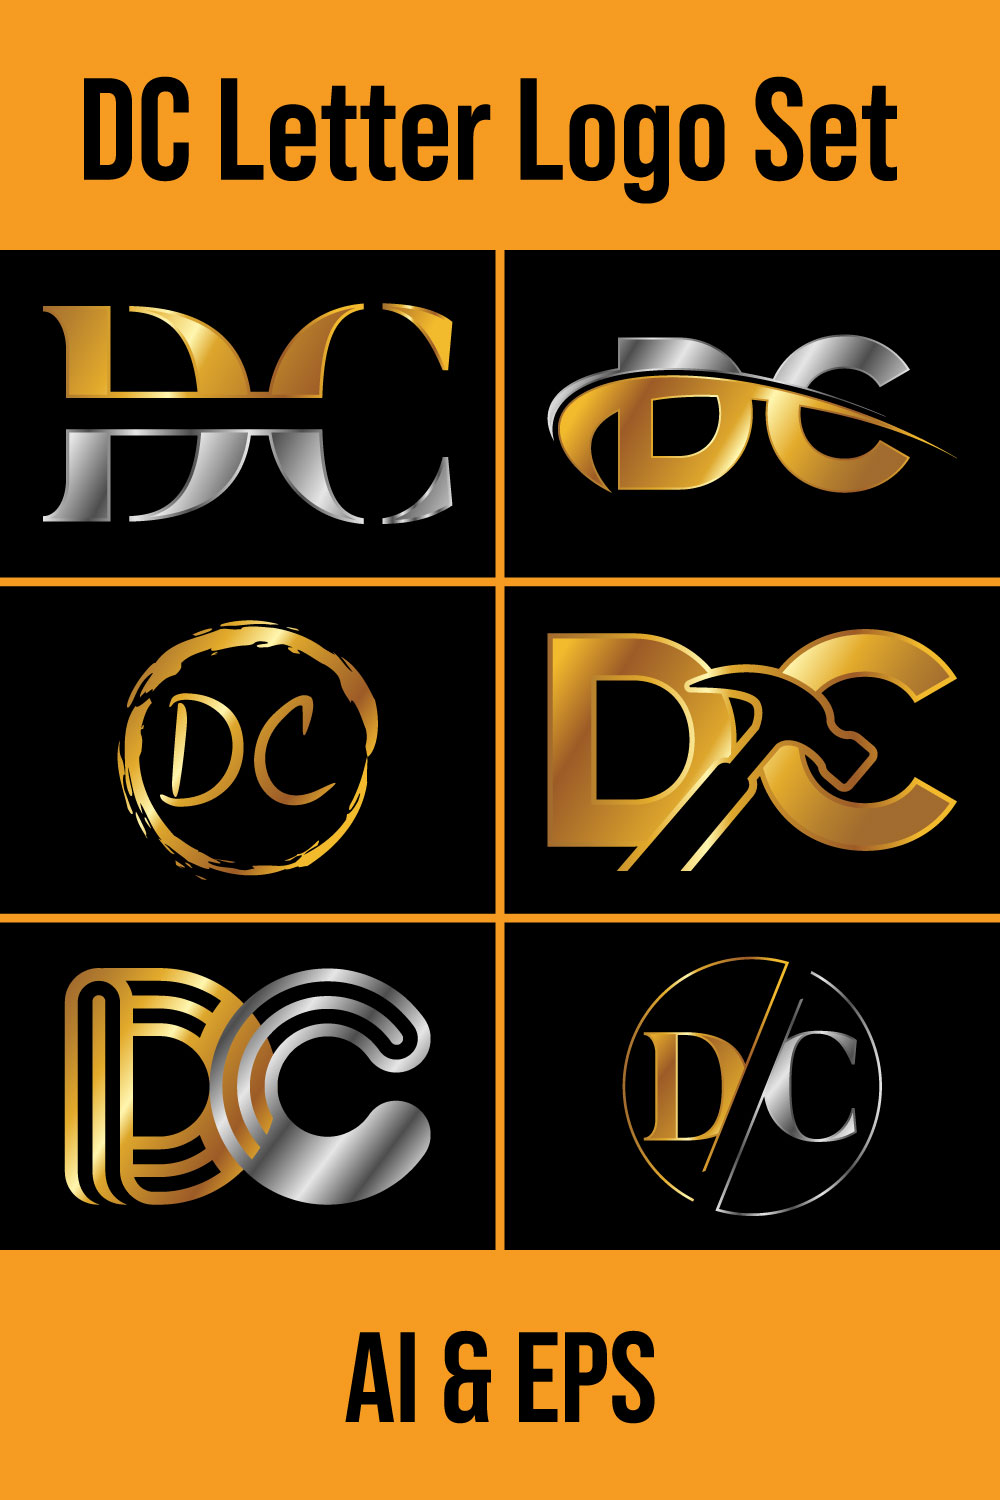 Letter D-C Logo Design Vector Template pinterest image.